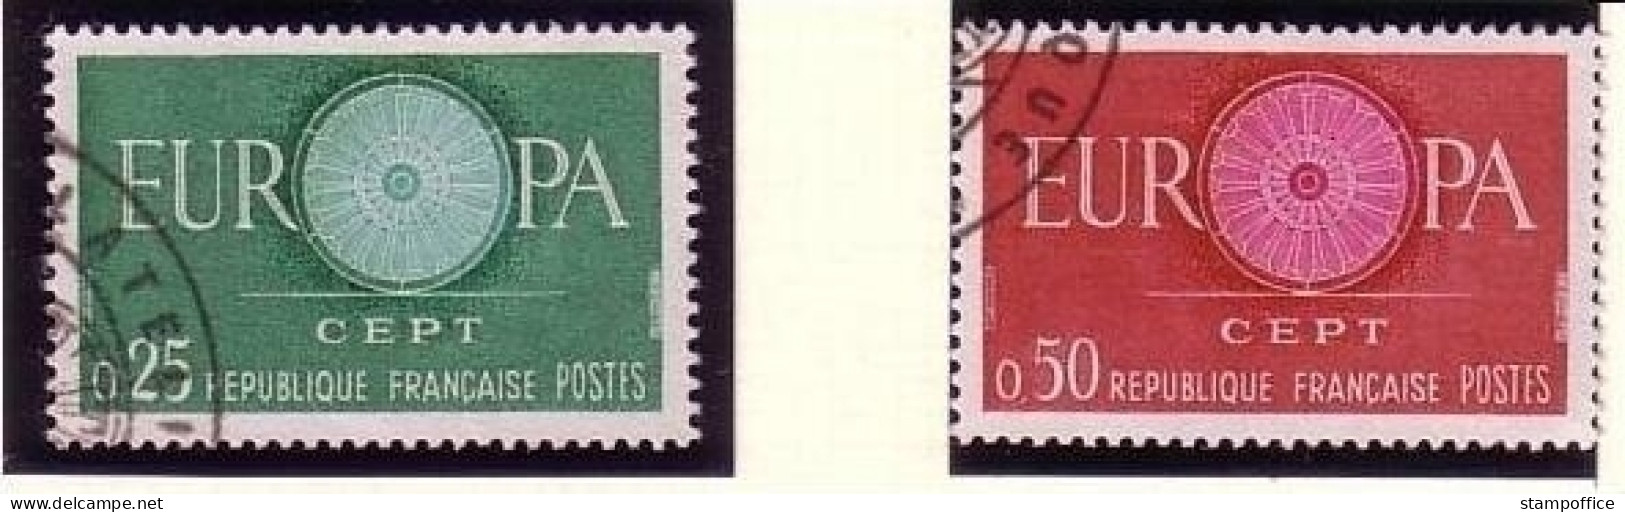 FRANKREICH MI-NR. 1318-1319 GESTEMPELT(USED) EUROPA 1960 WAGENRAD - 1960